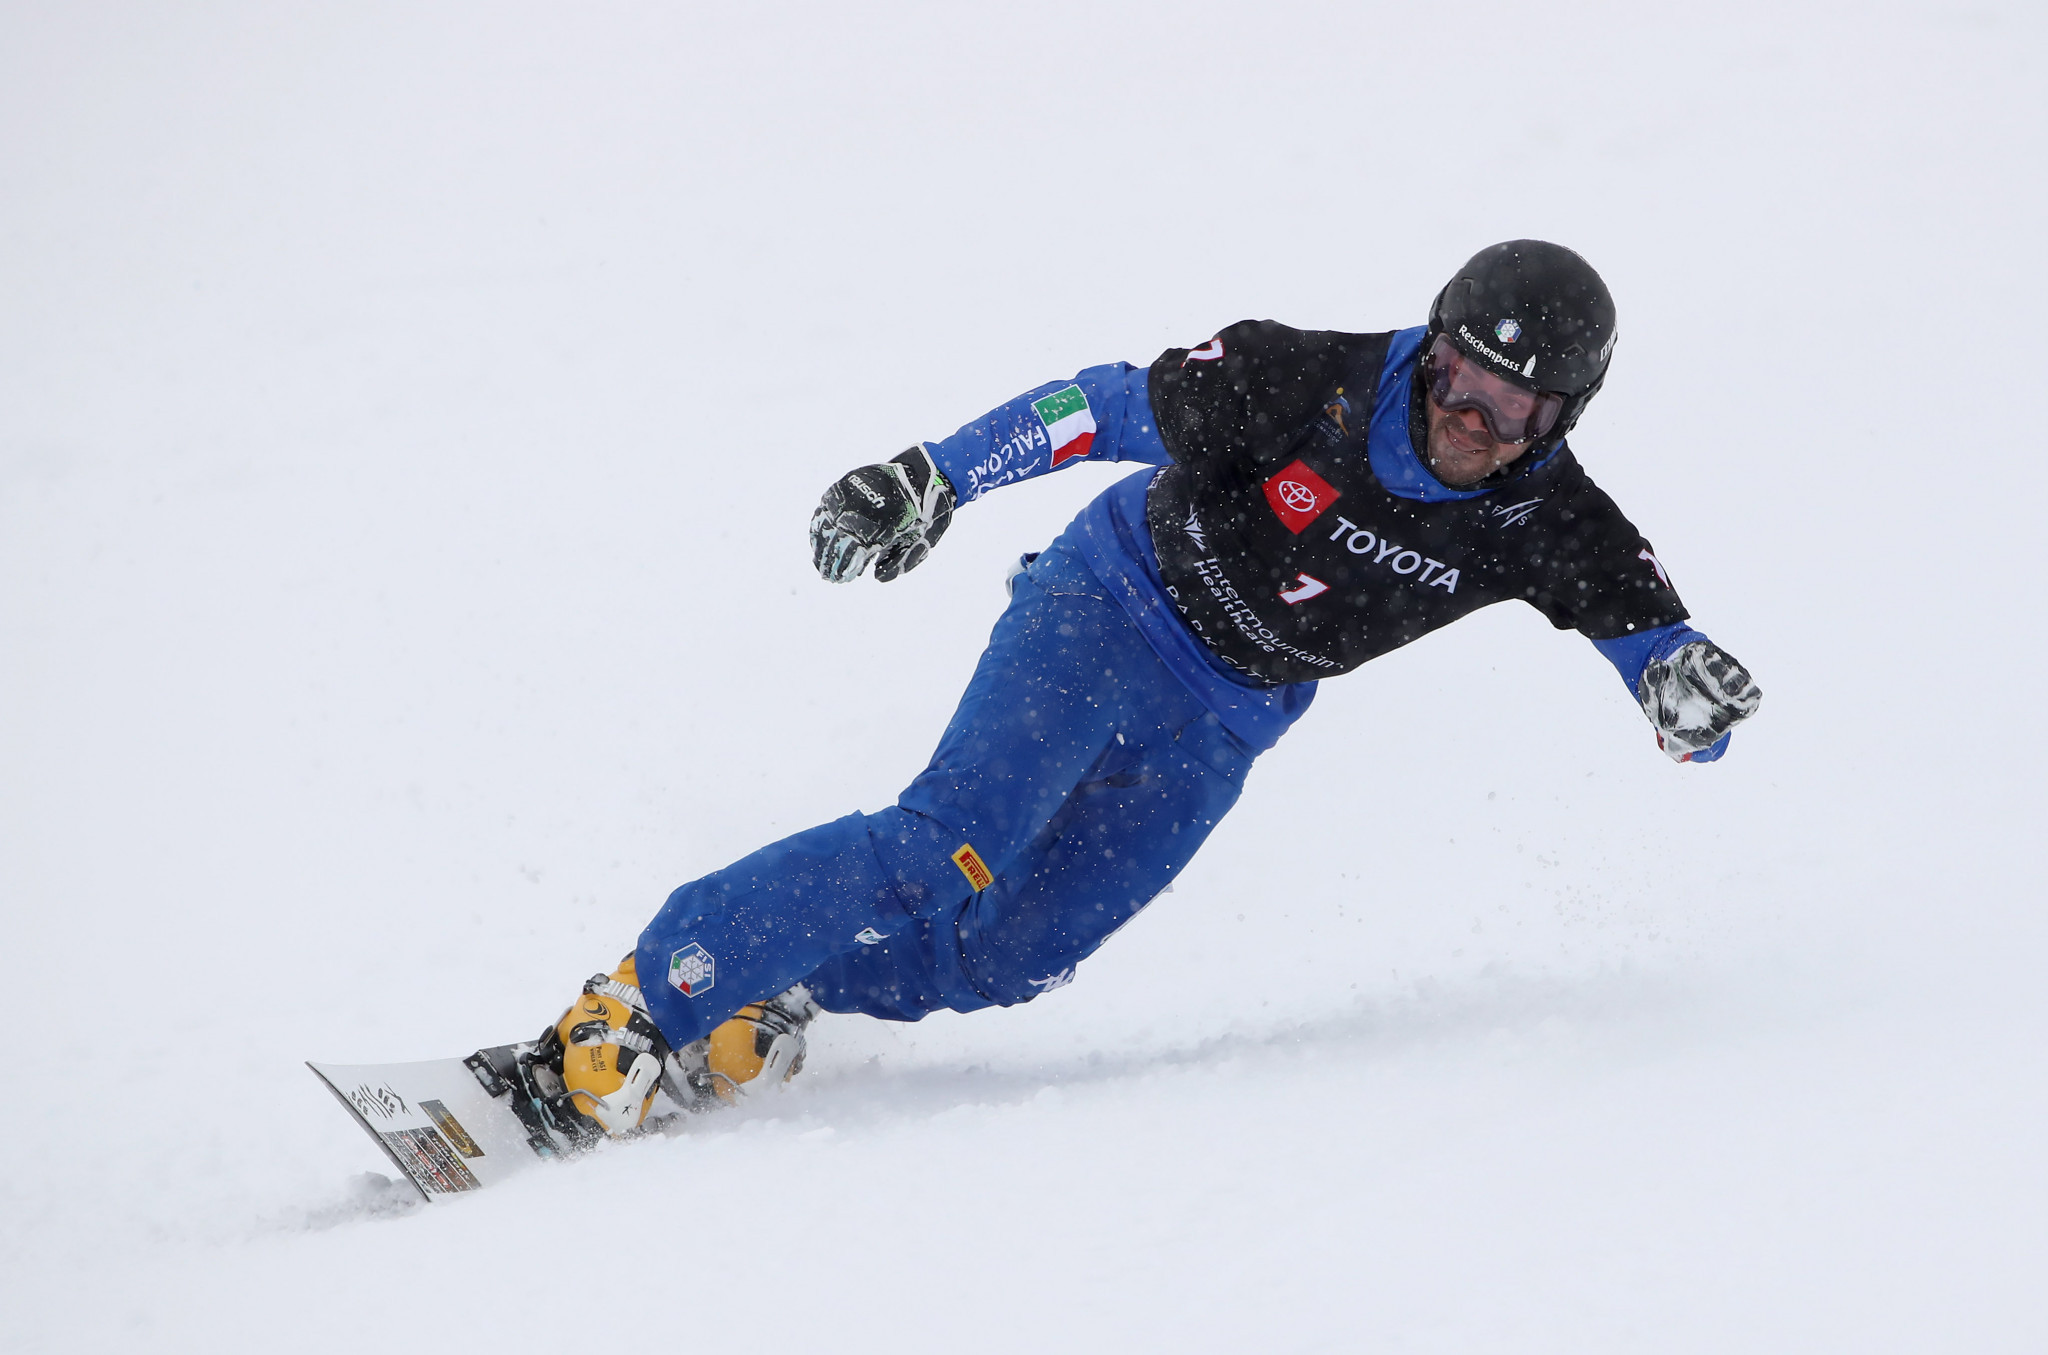 Italy's Coratti repeats win in men's parallel giant slalom at FIS Snowboard World Cup in Rogla